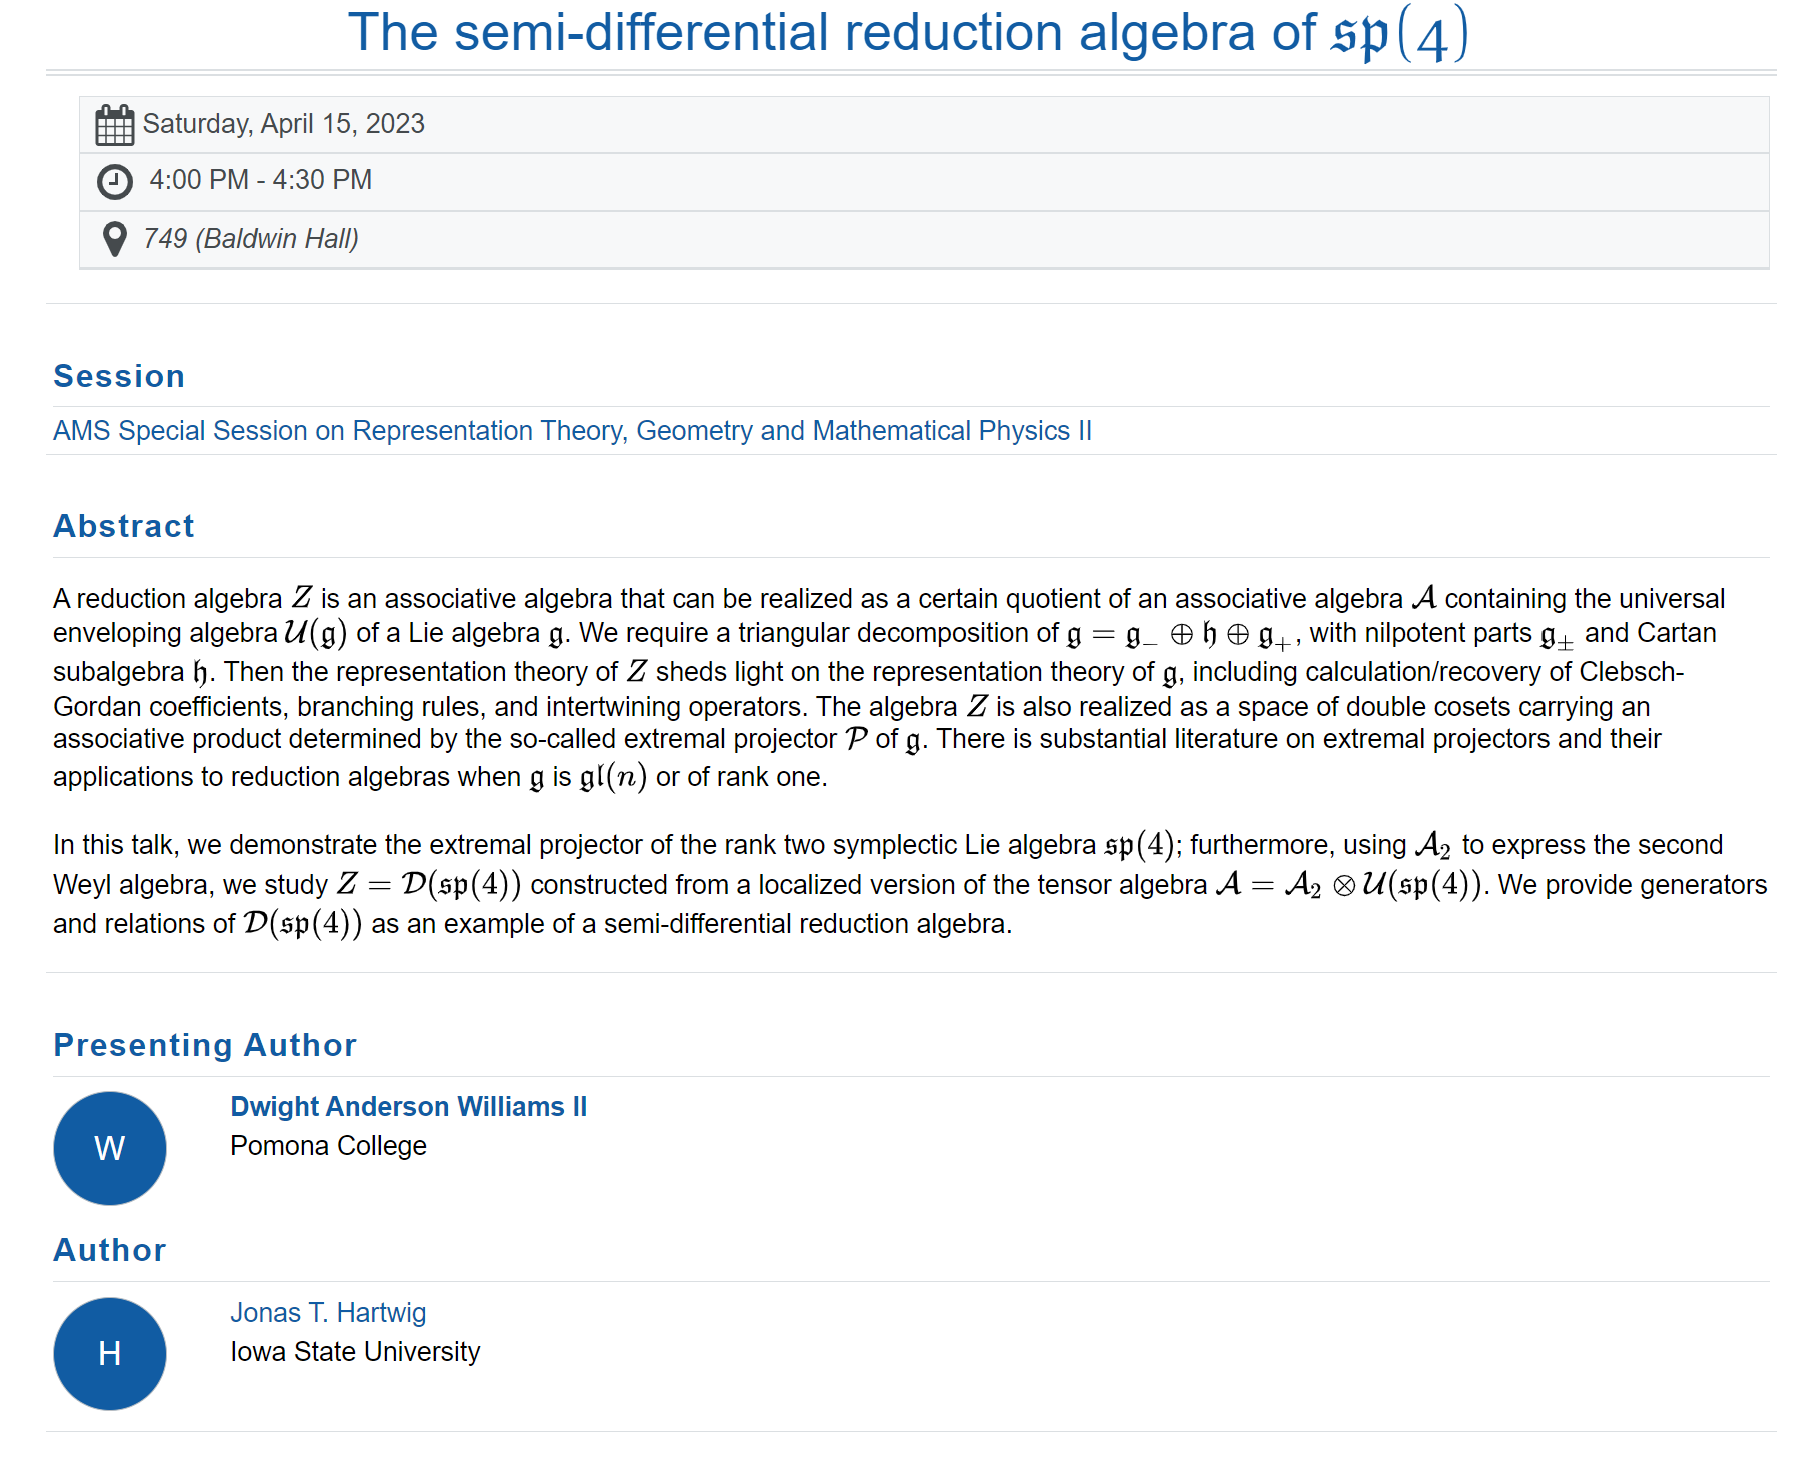 Talk: The semi-differential reduction algebra of sp(4)